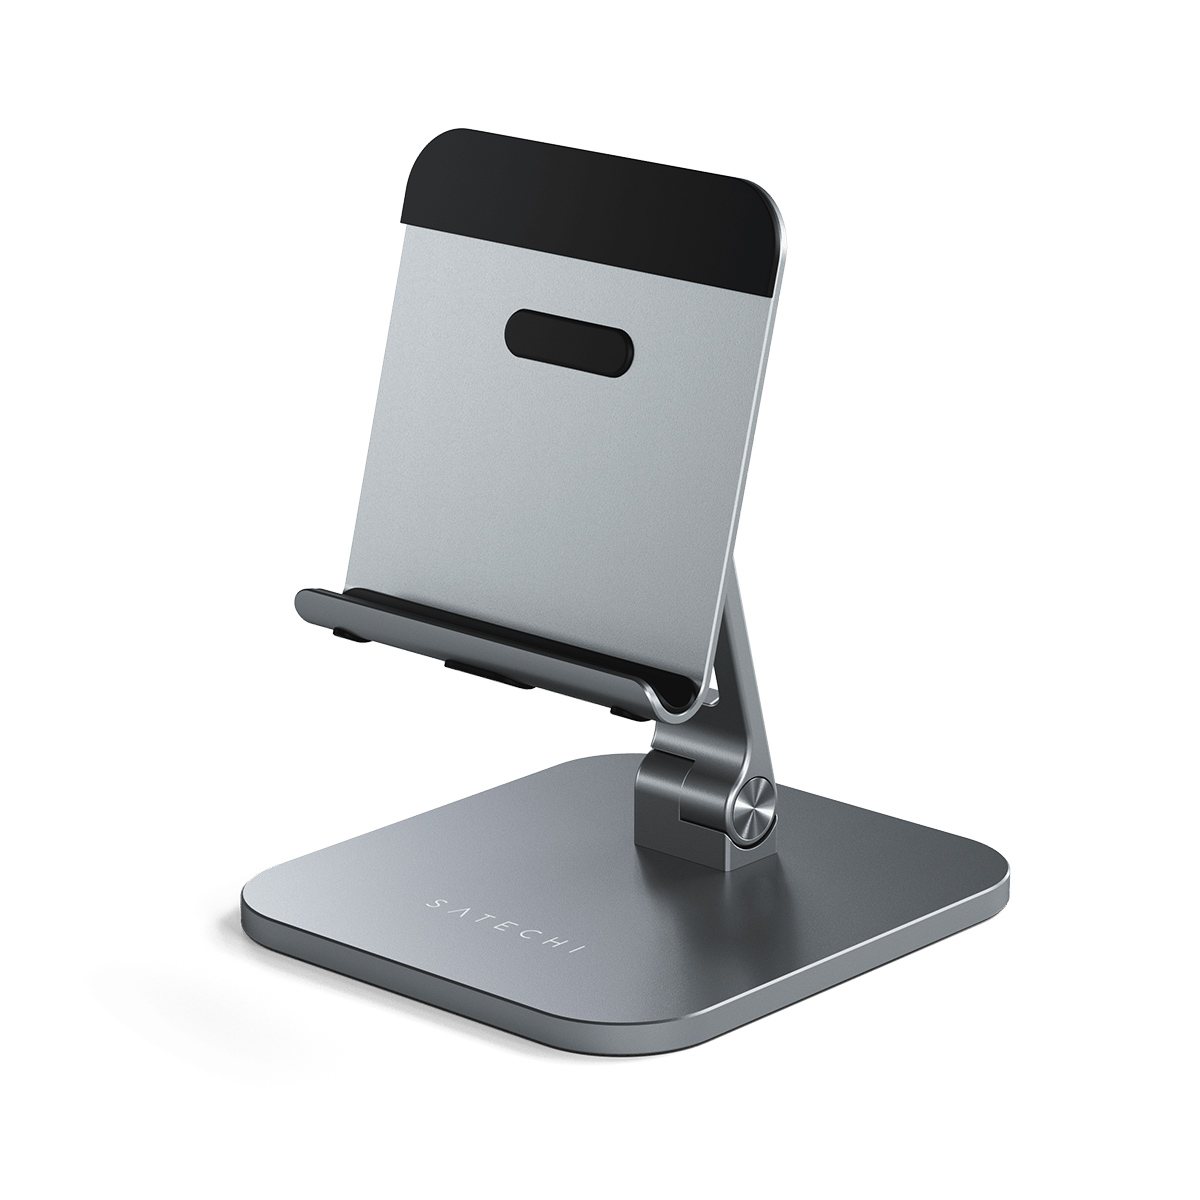 Giá đỡ iPad Satechi Desktop Stand